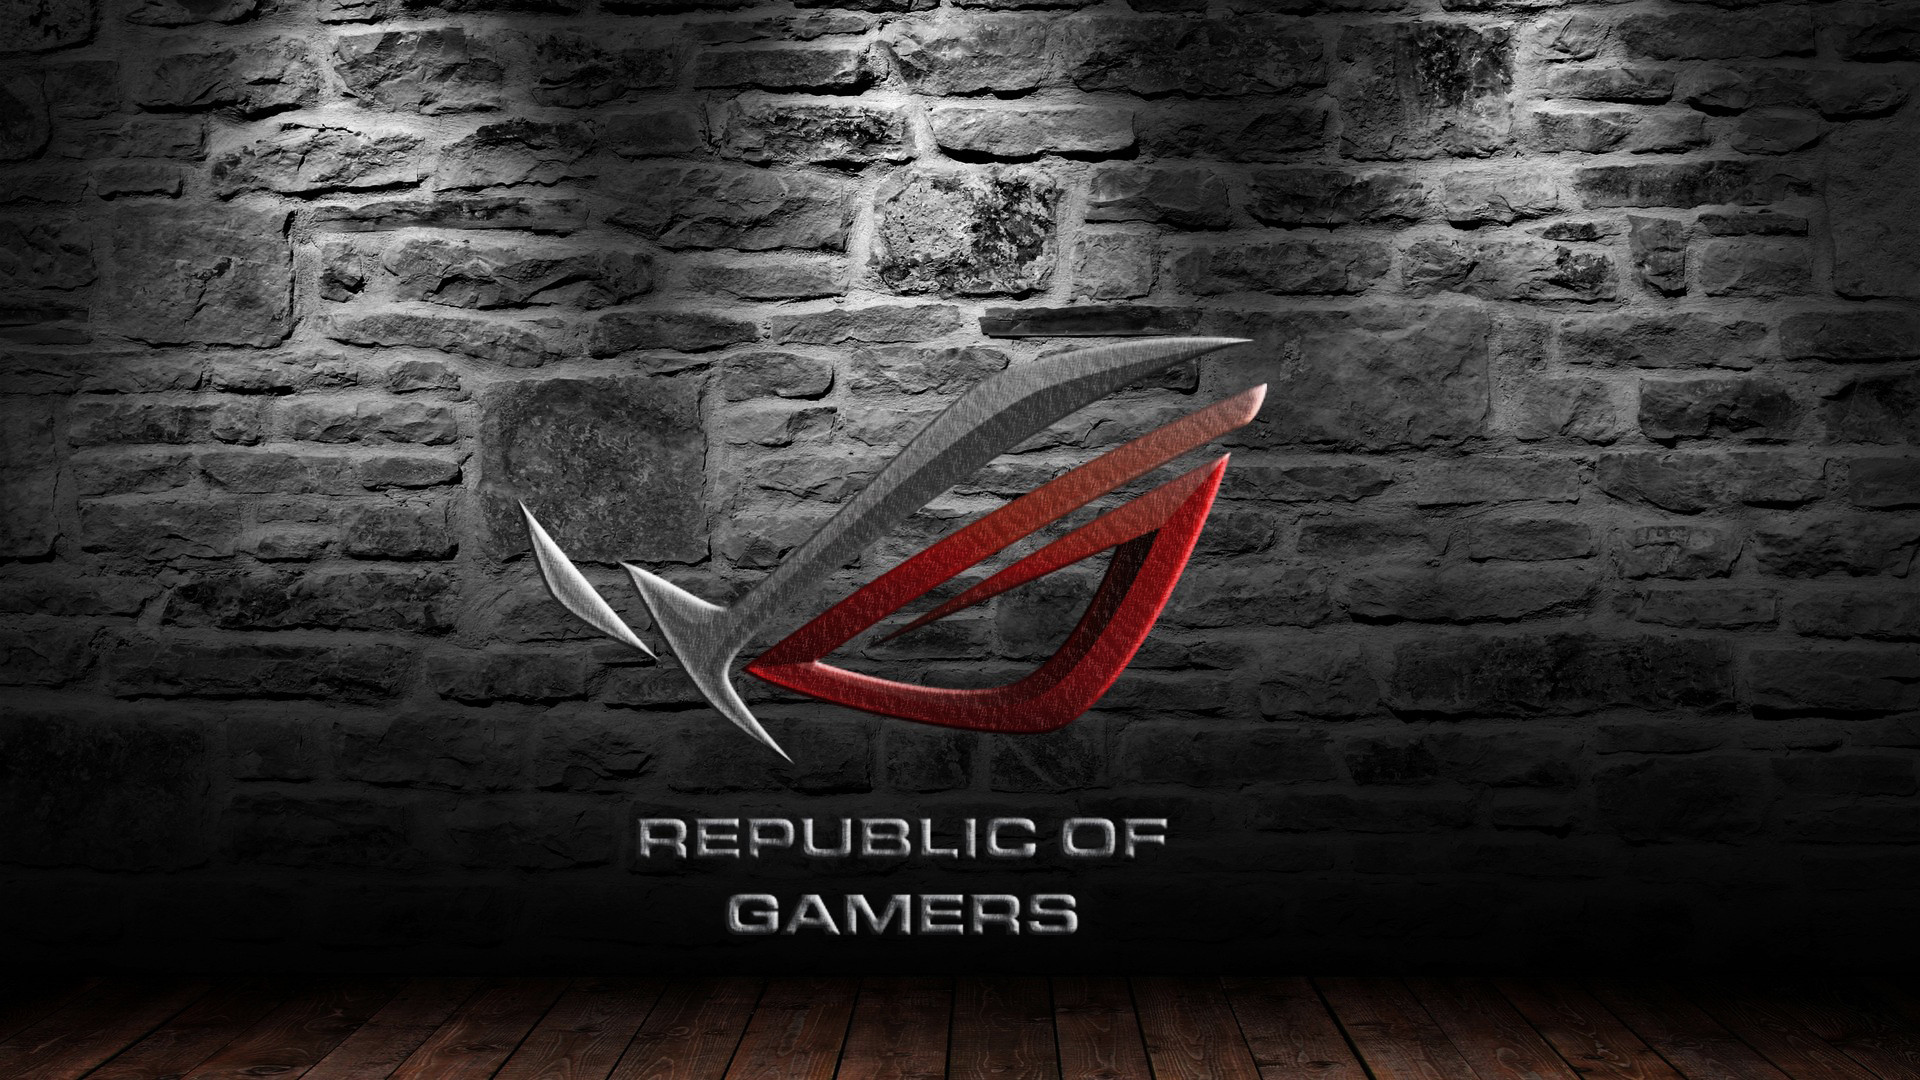 1920x1080 asus rog (republic of gamers) logo hd.  1080p wallpaper and .